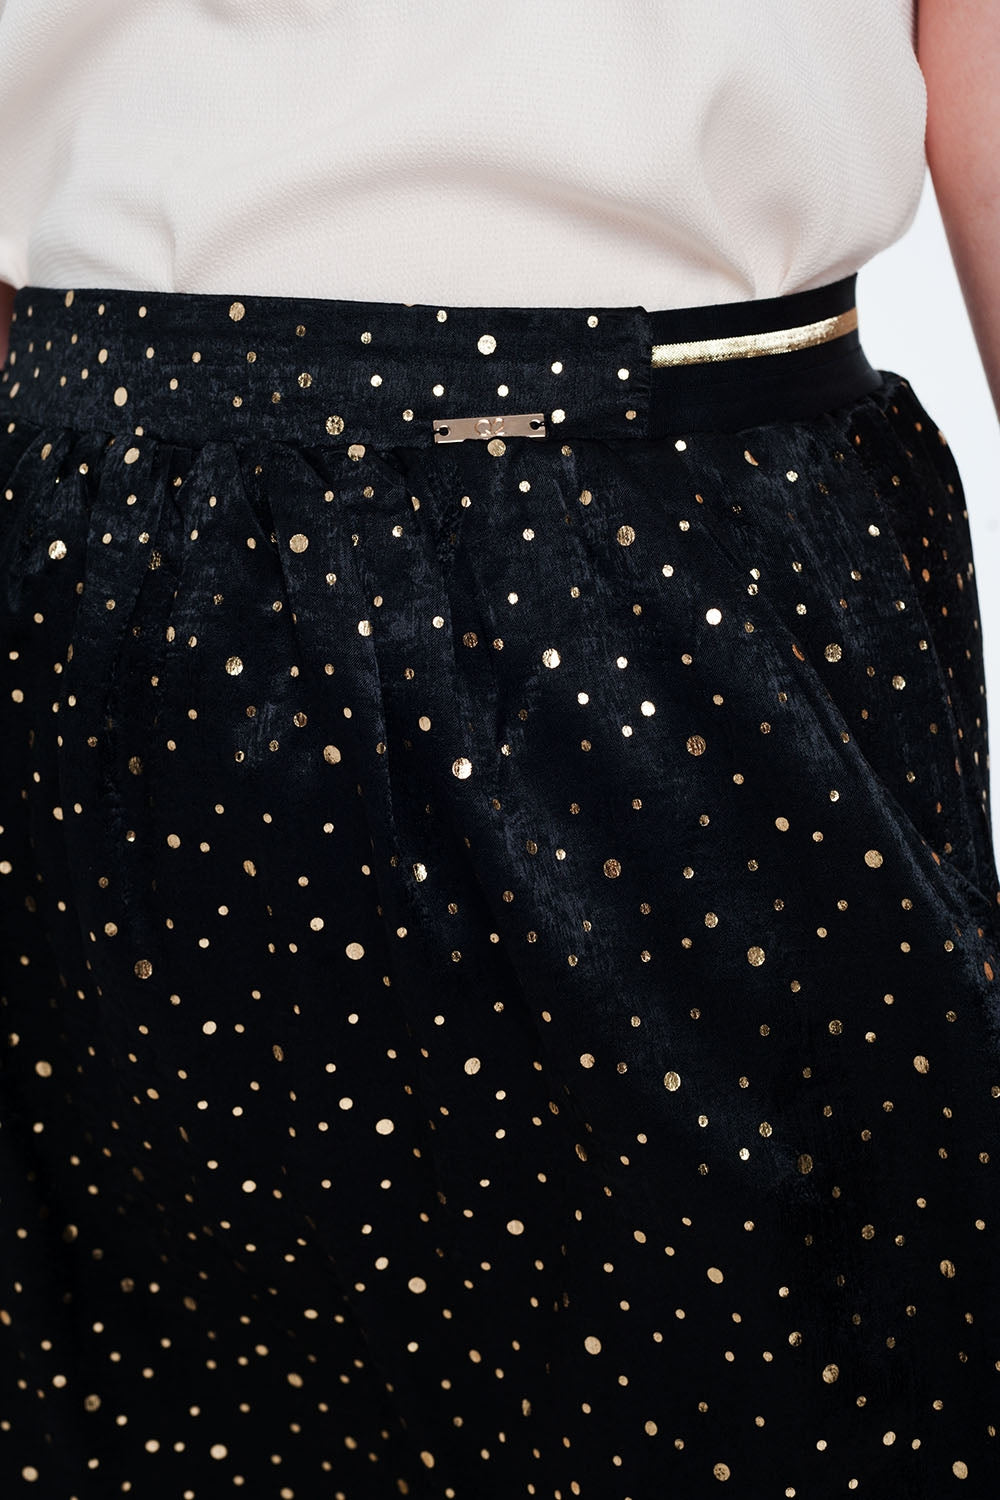 Black mini skirt with pleats in gold polka dotSkirts